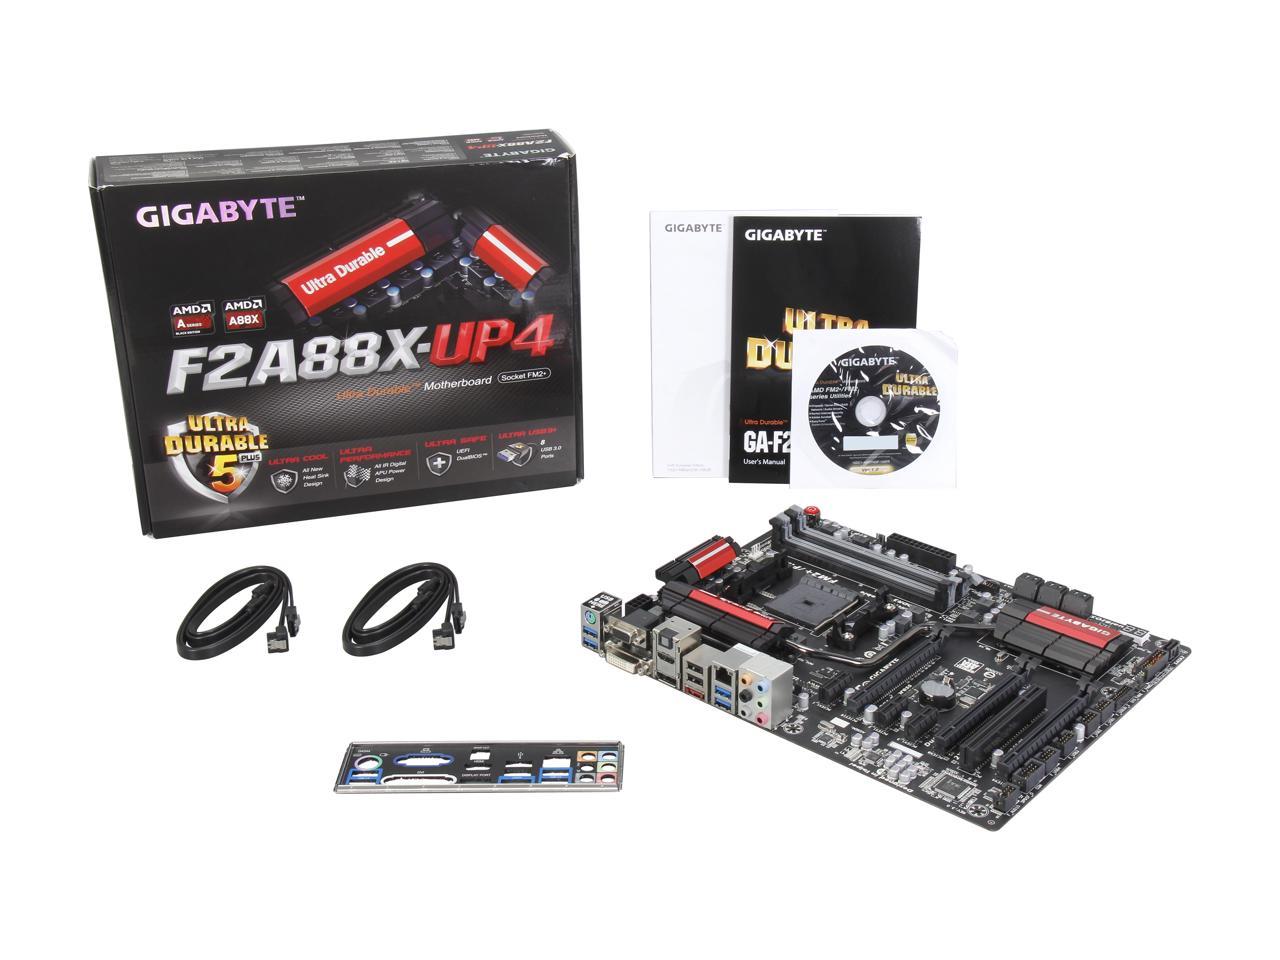 GIGABYTE GA-F2A88X-UP4 FM2+ / FM2 ATX AMD Motherboard - Newegg.com